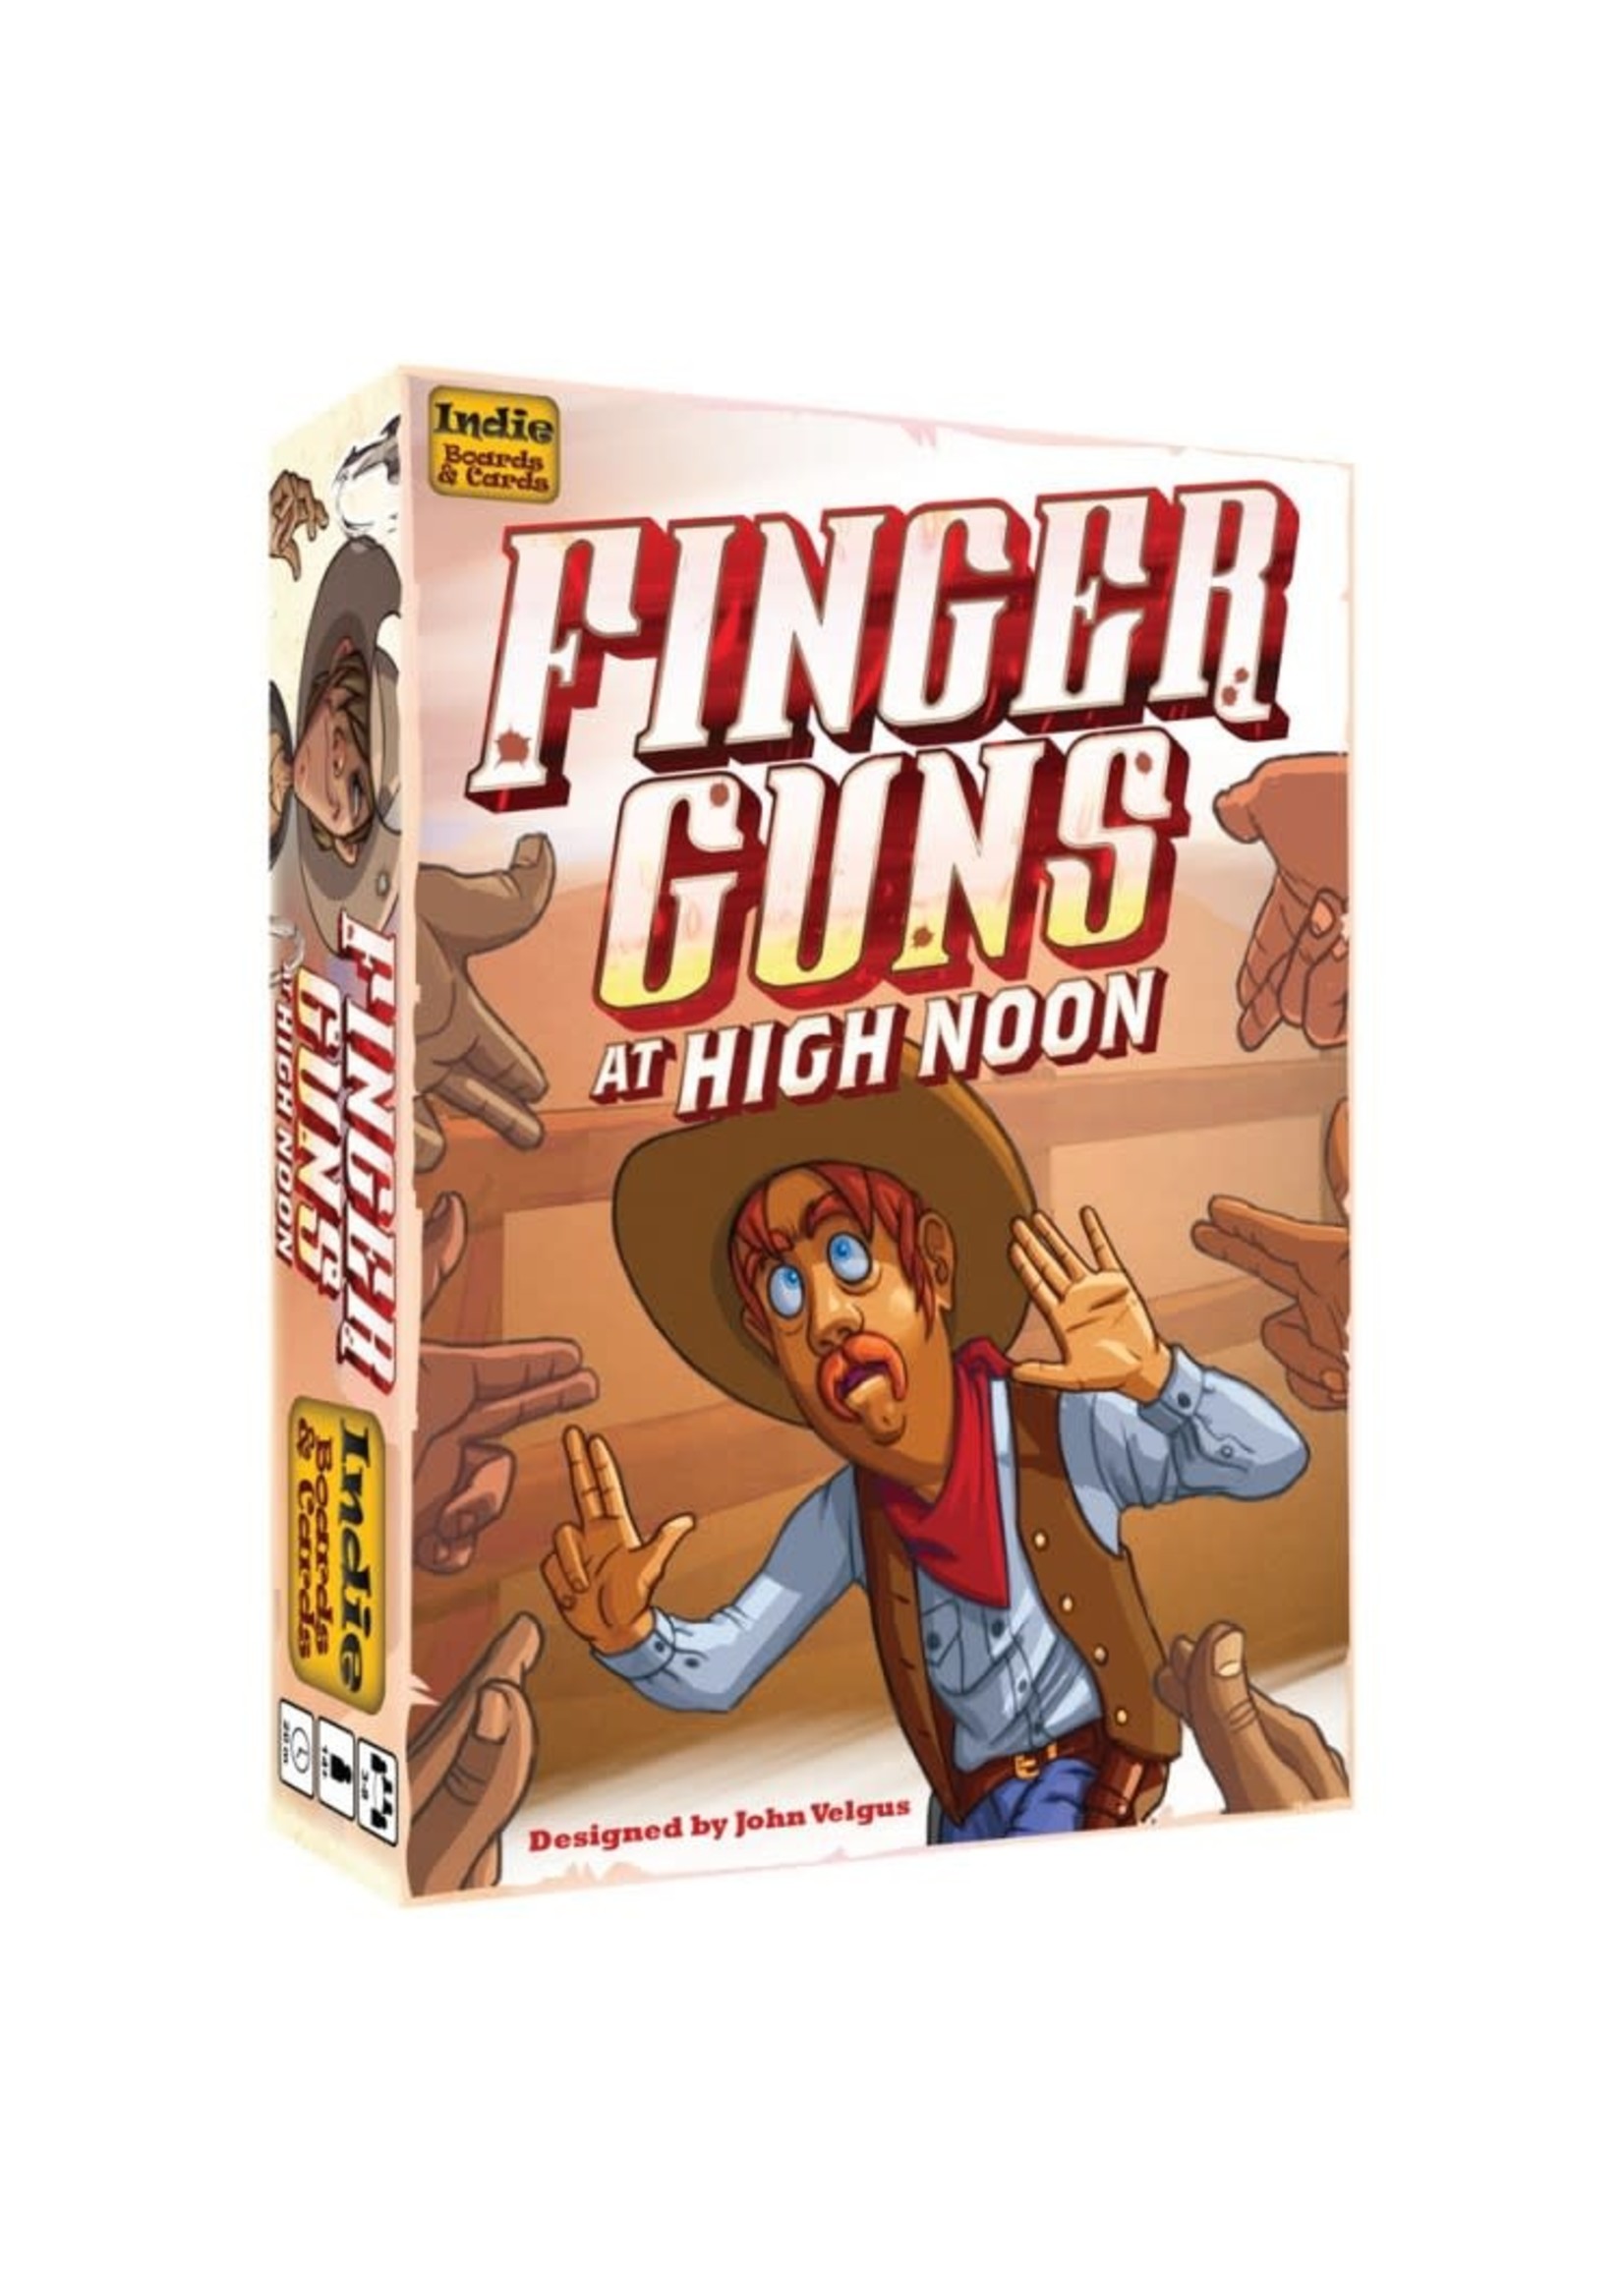 RENTAL - Finger Guns at High Noon 8.3oz